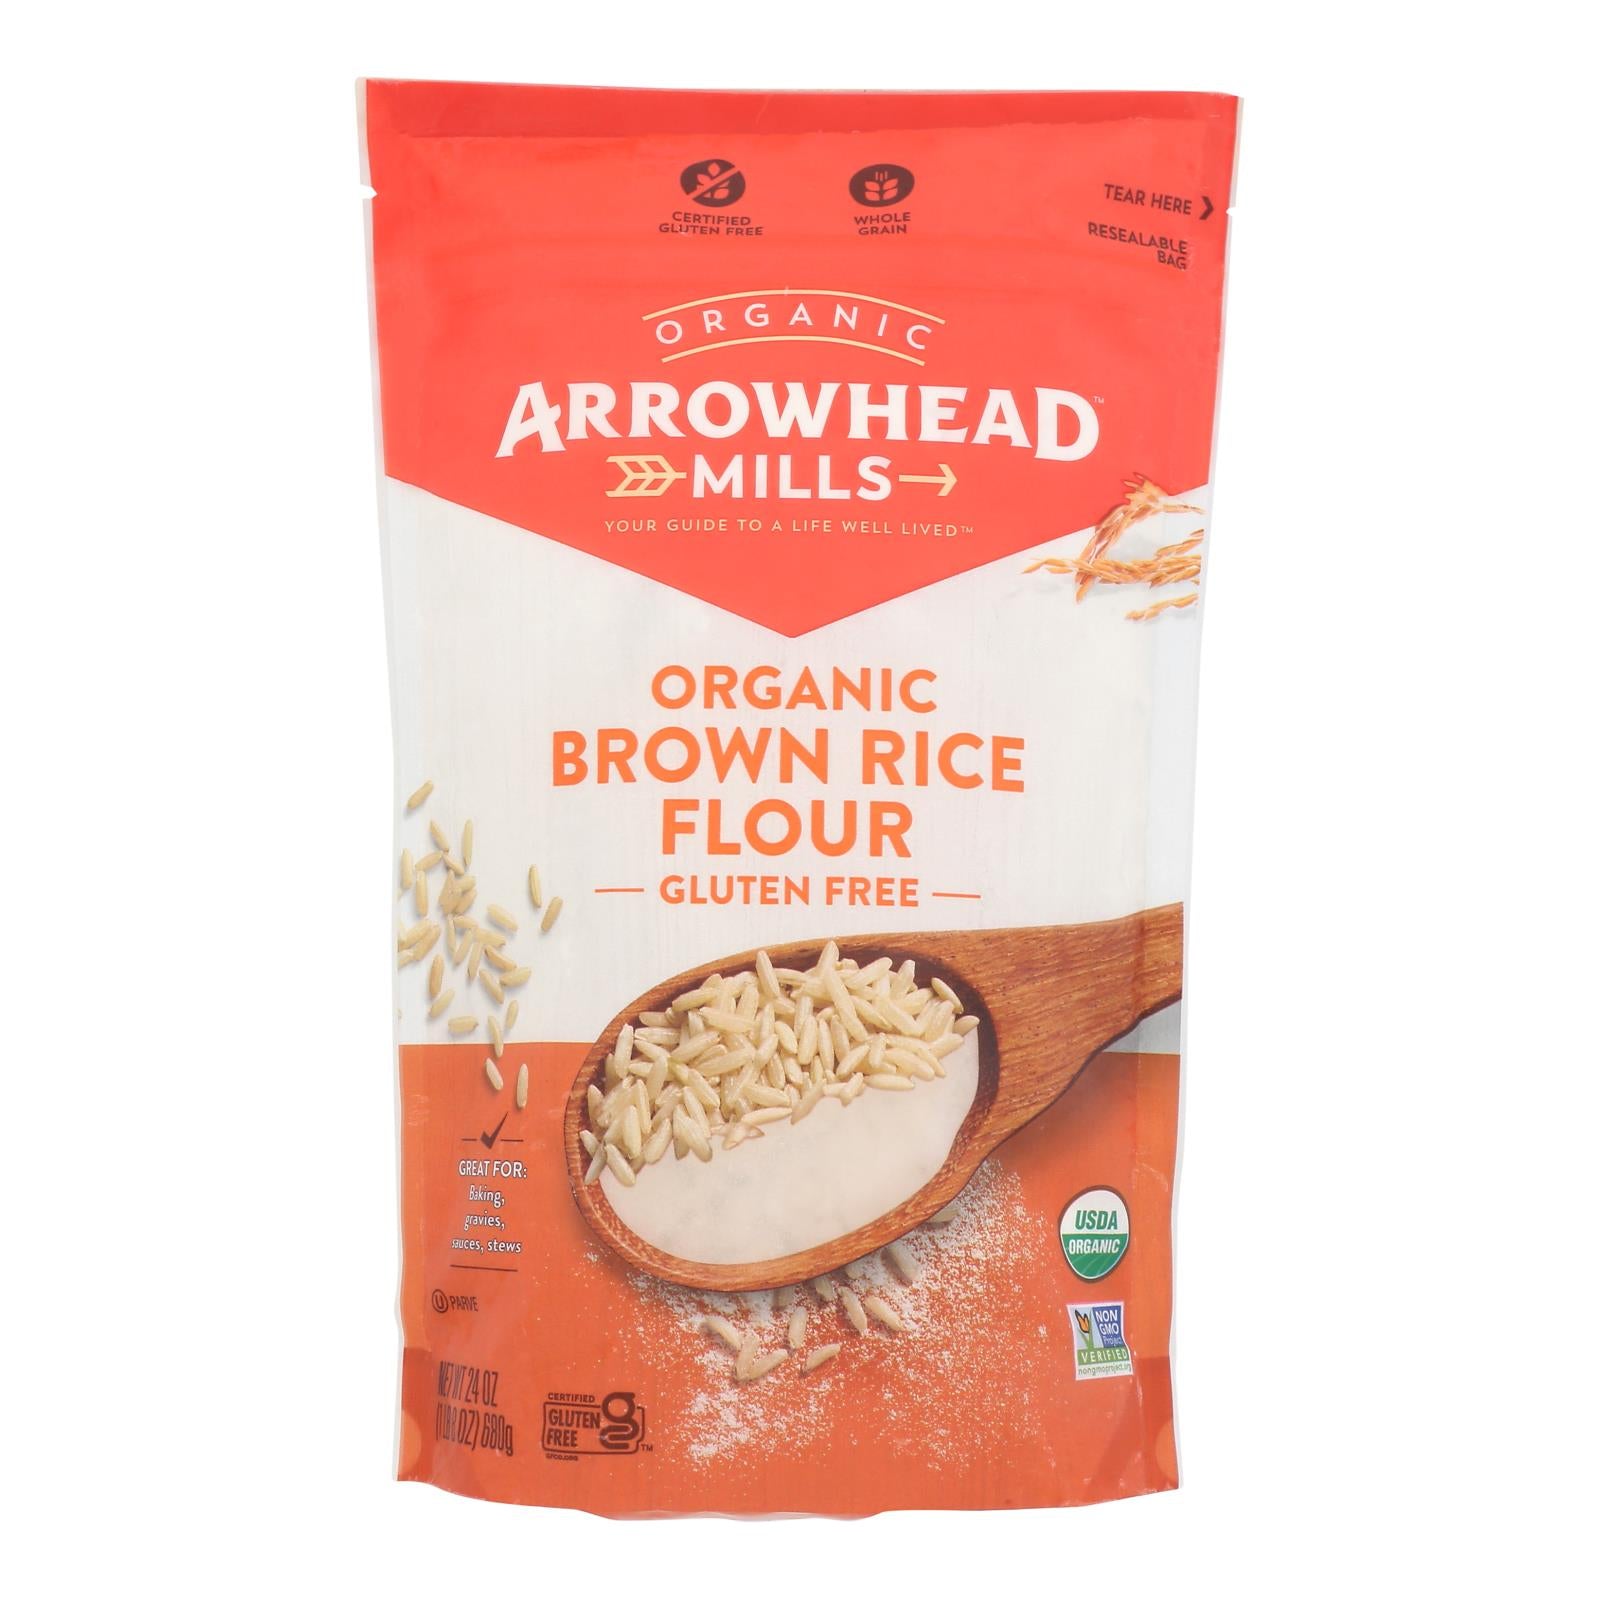 Arrowhead Mills - Organic Brown Rice Flour - Gluten Free - Case Of 6 - 24 Oz.